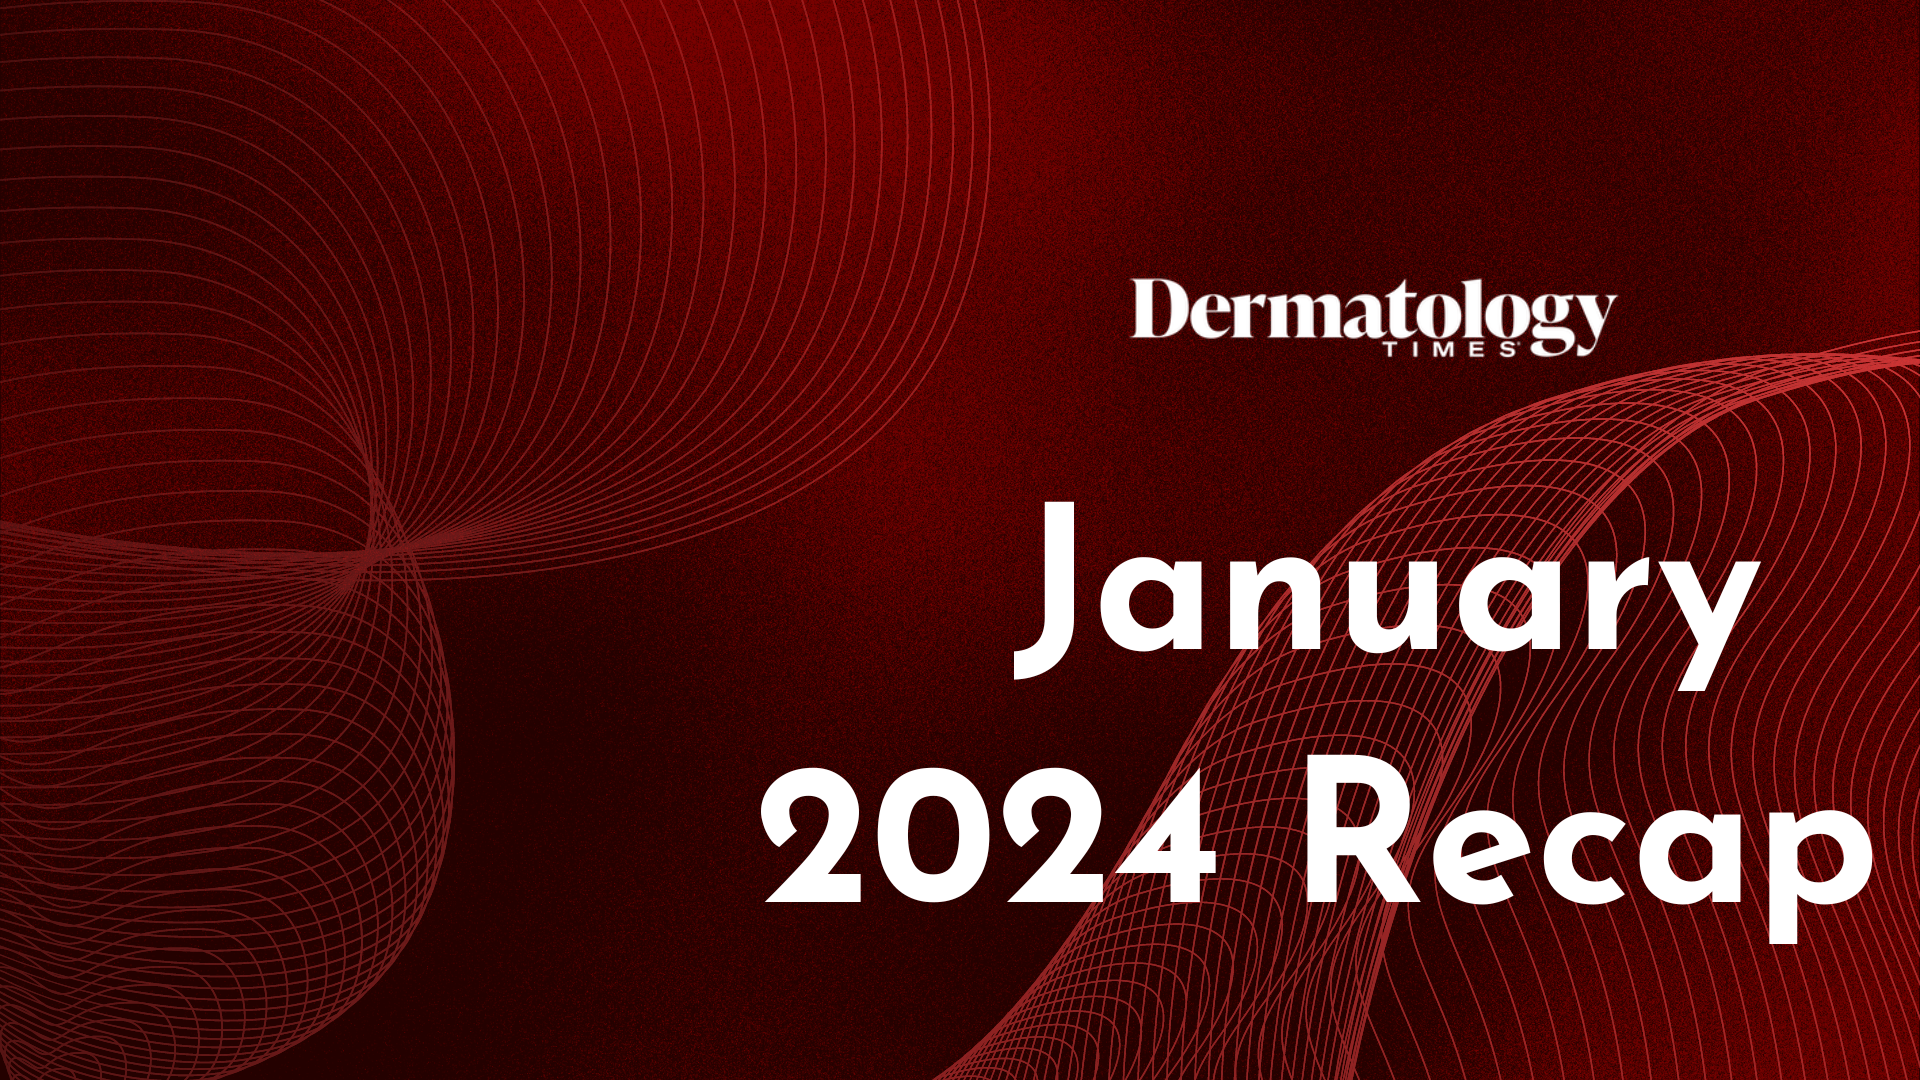 Dermatology Times January 2024 Recap